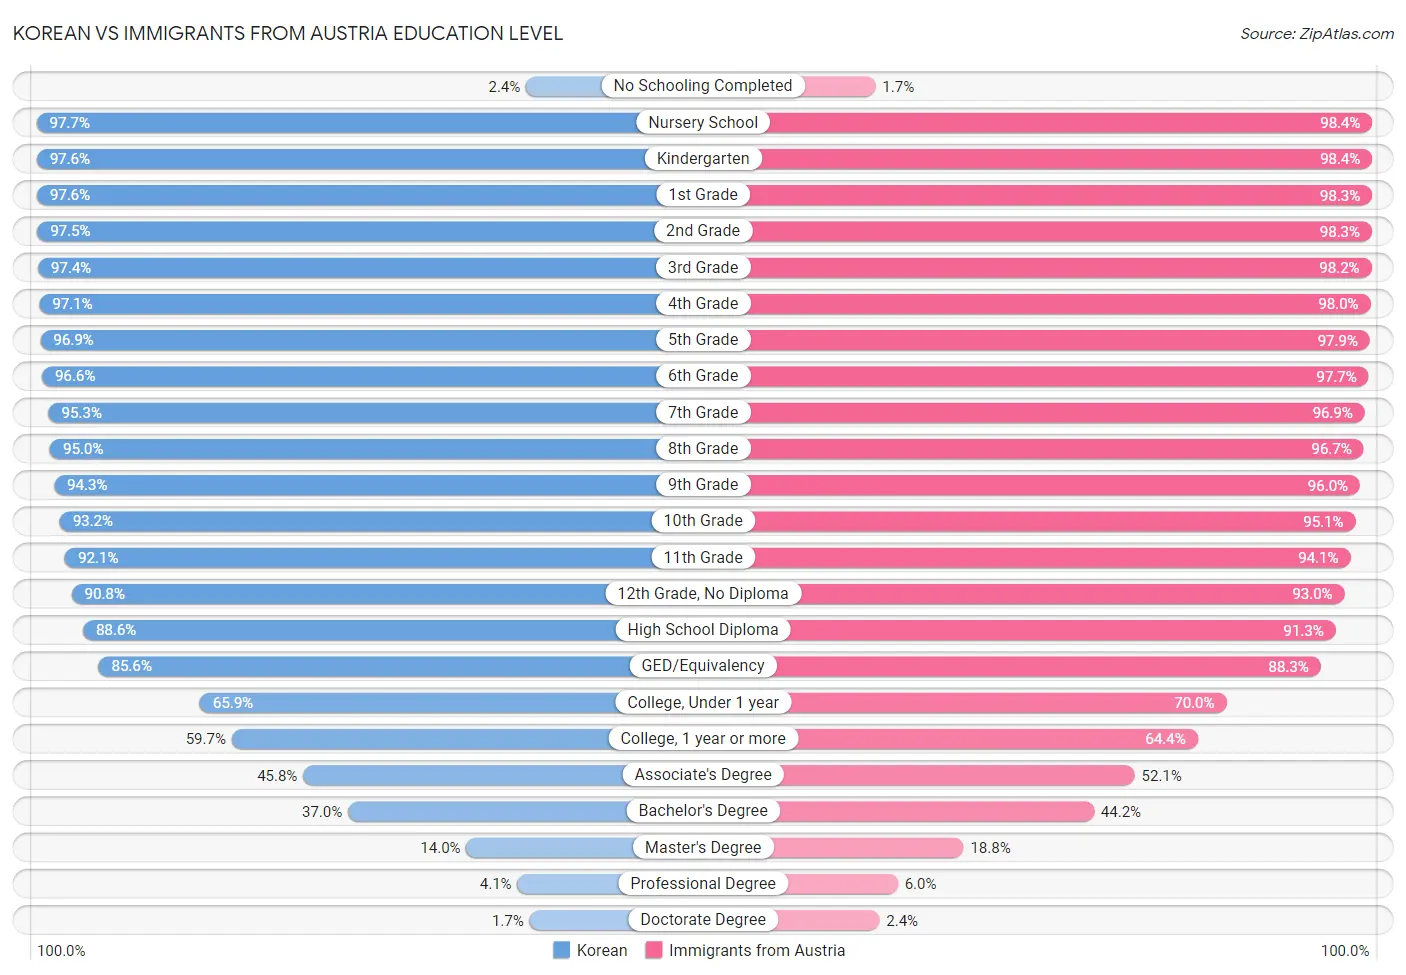 Korean vs Immigrants from Austria Education Level